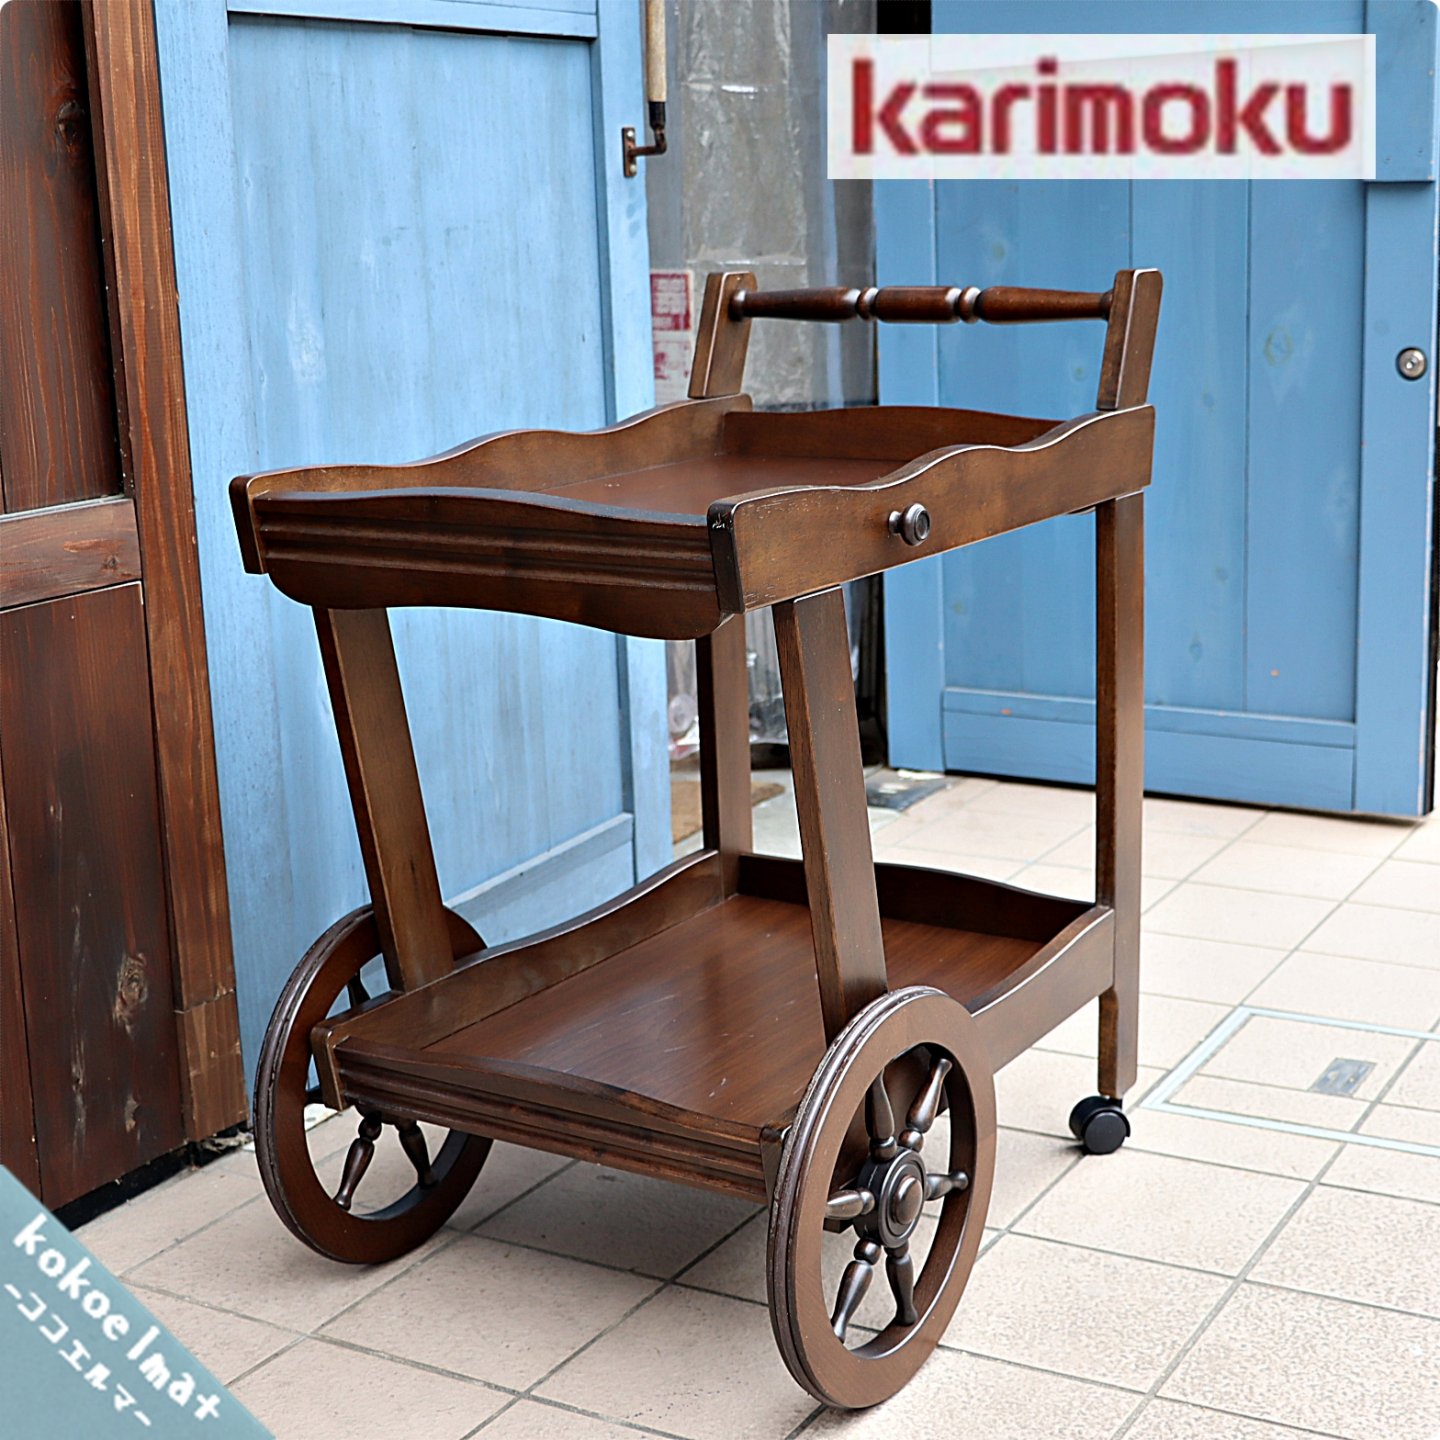 karimoku(カリモク家具) アンティーク調 キッチンワゴンです 